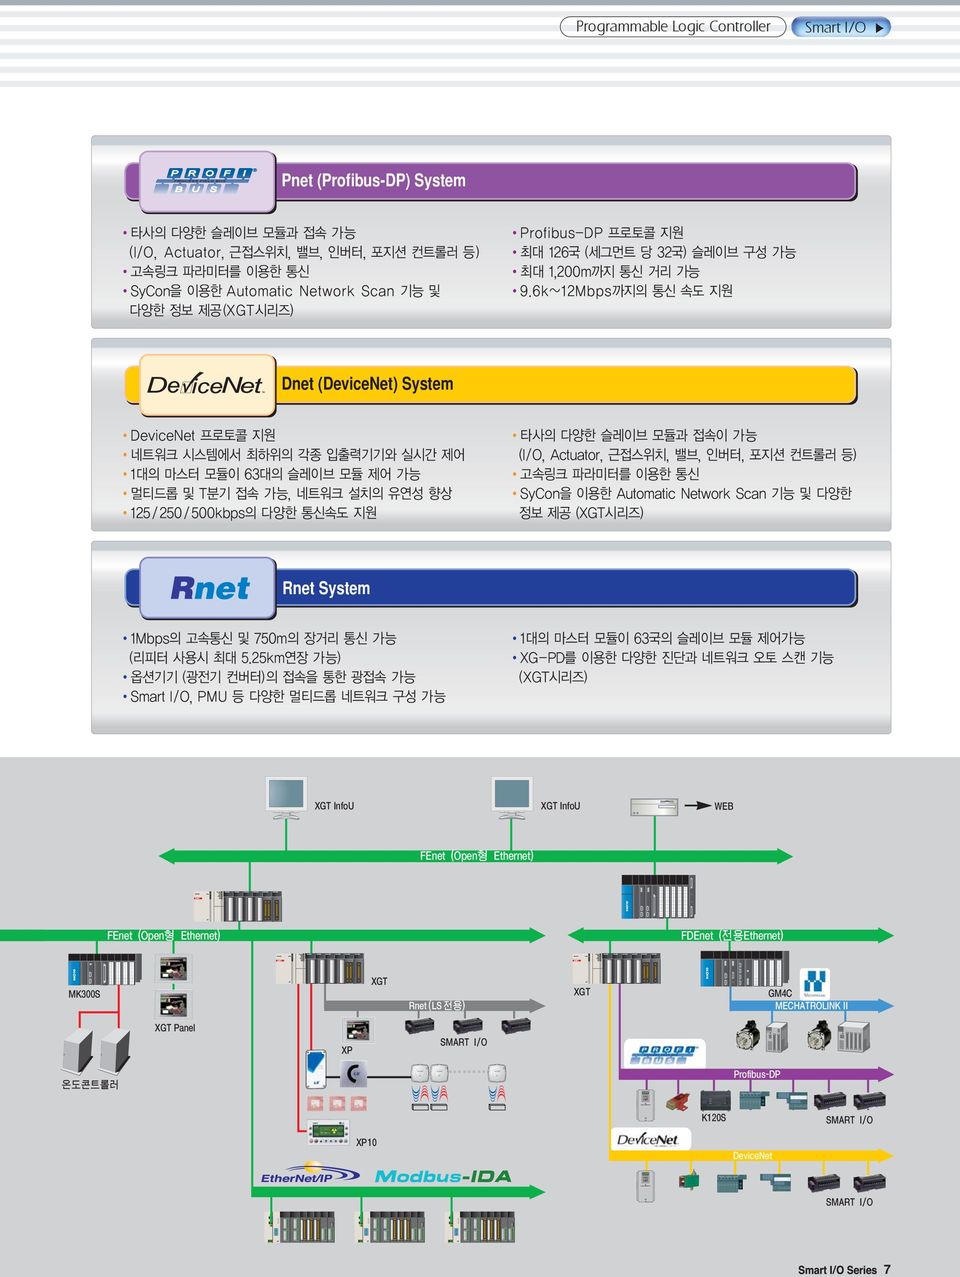 FEnet (Open형 Ethernet) FDEnet (전용Ethernet) MK300S XGT Rnet (LS 전용) XGT GM4C